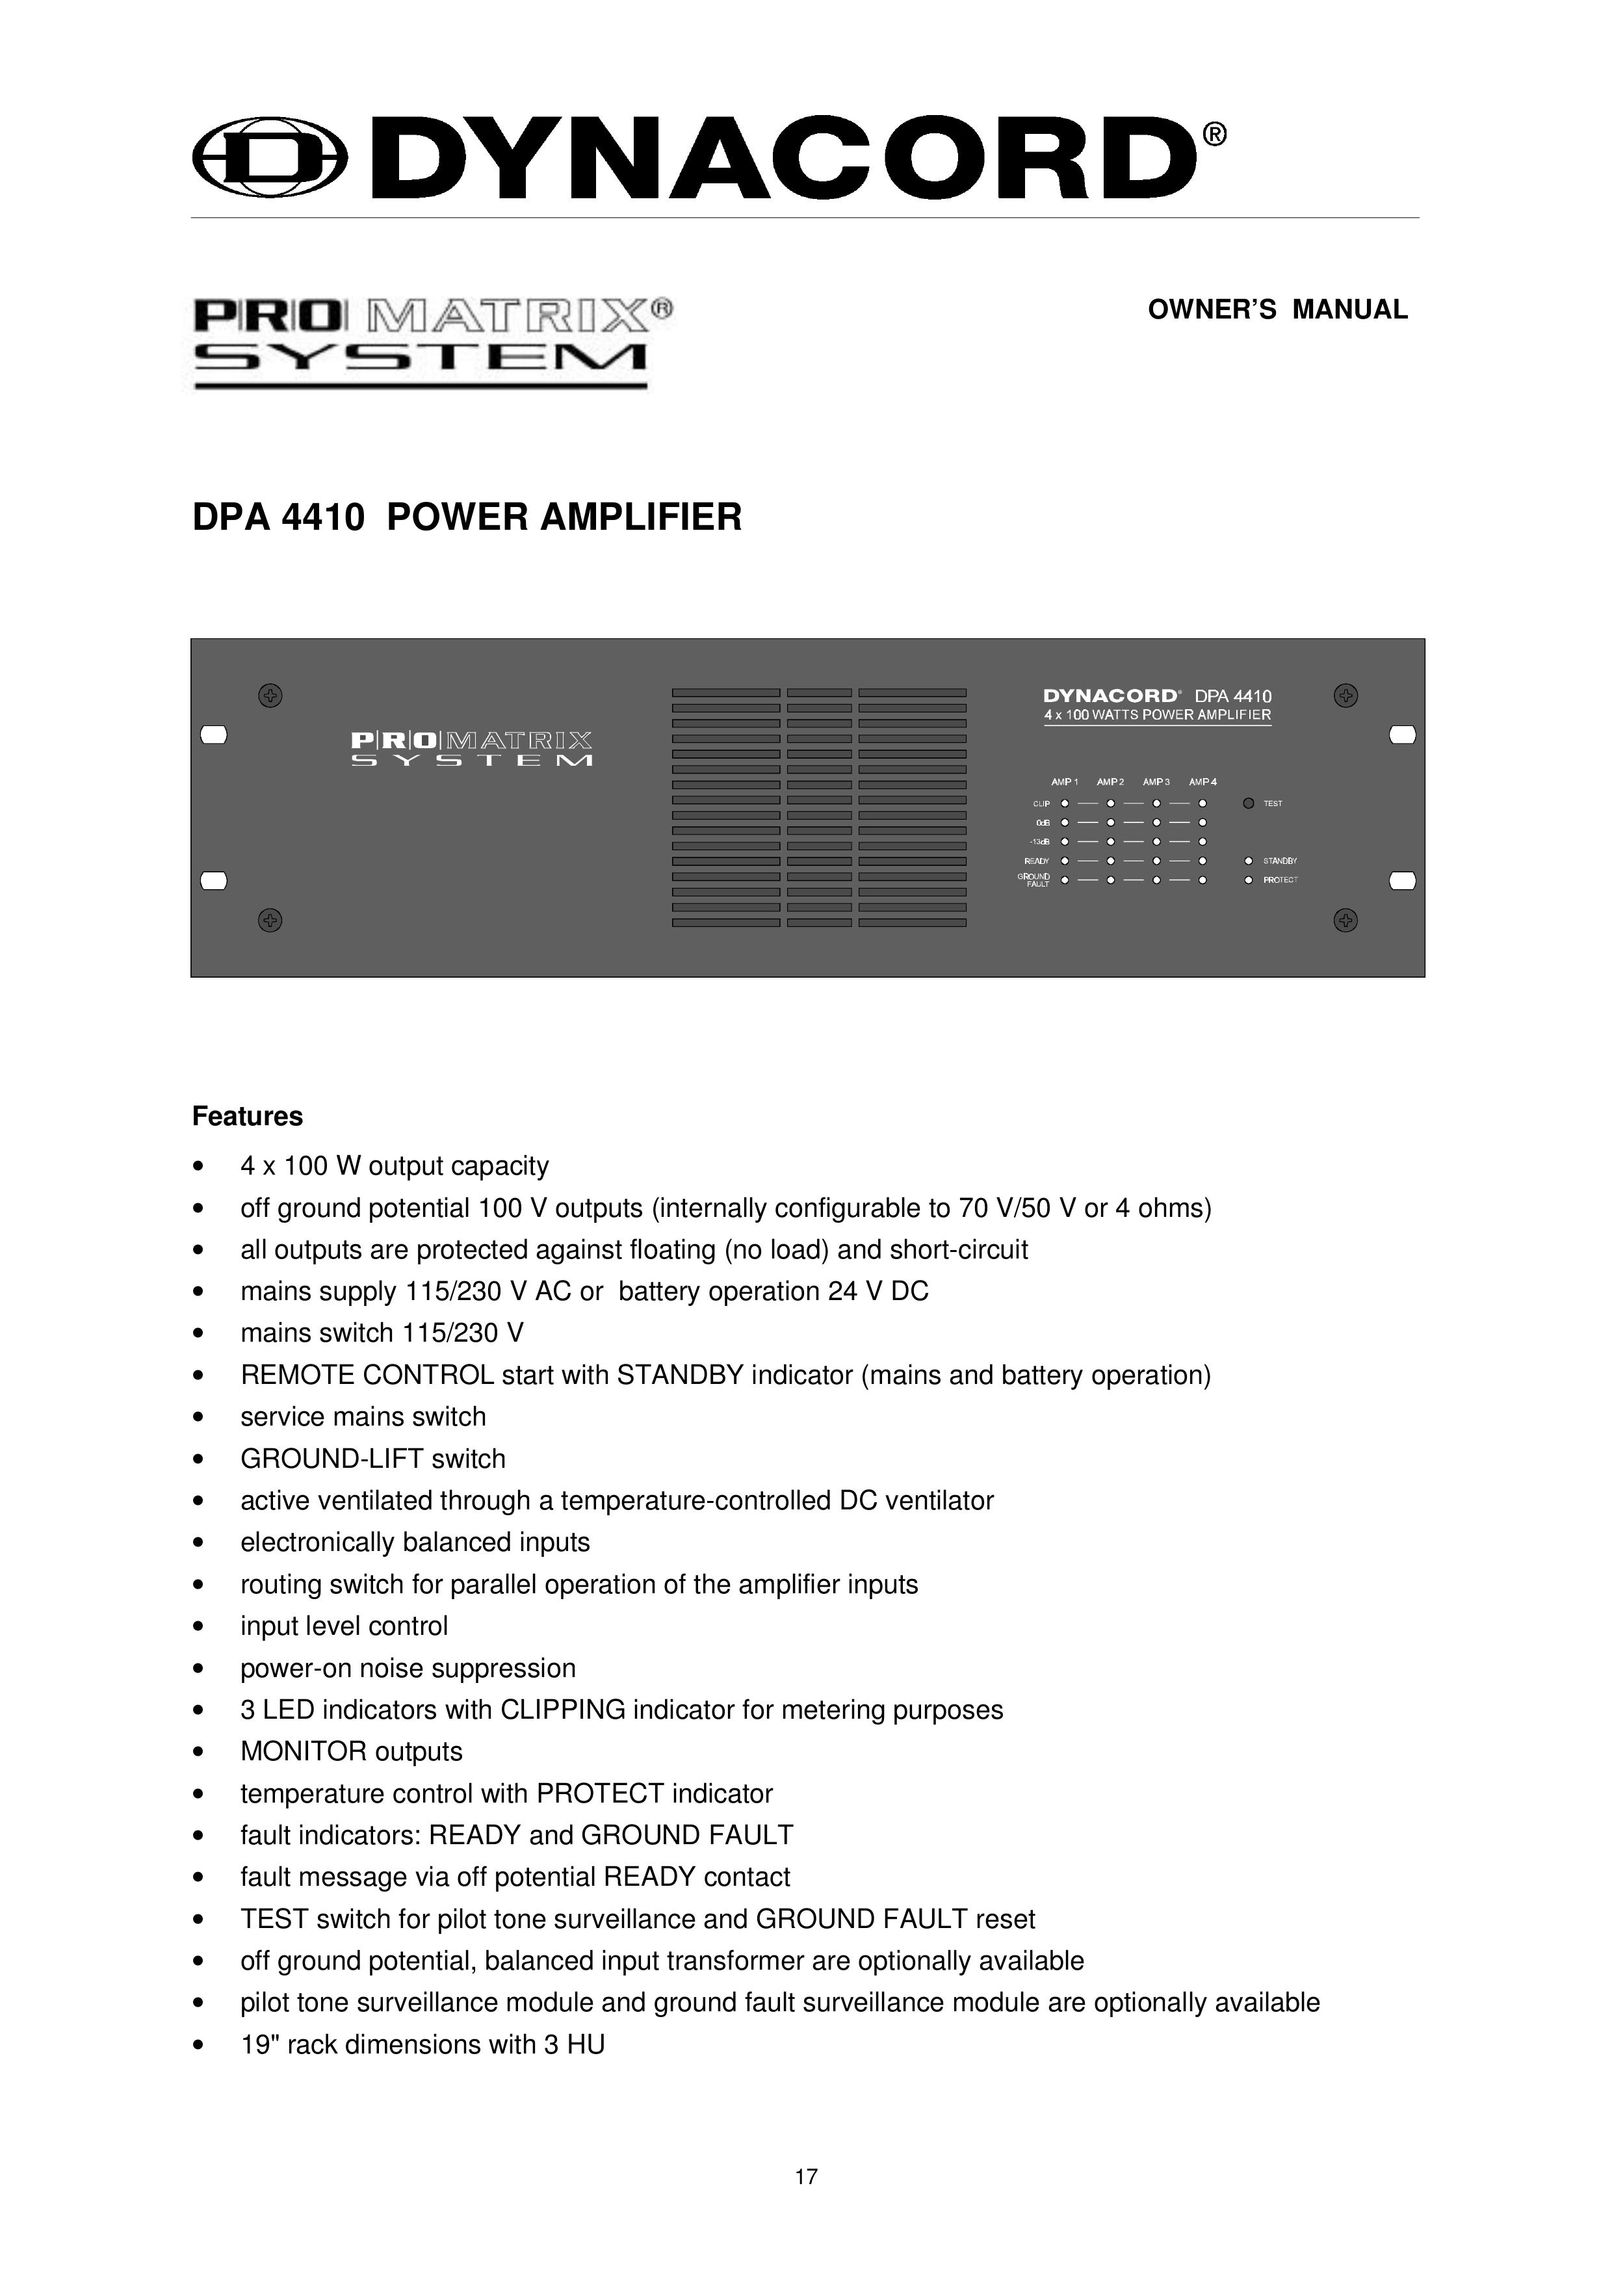 Dynacord DPA 4410 Car Amplifier User Manual